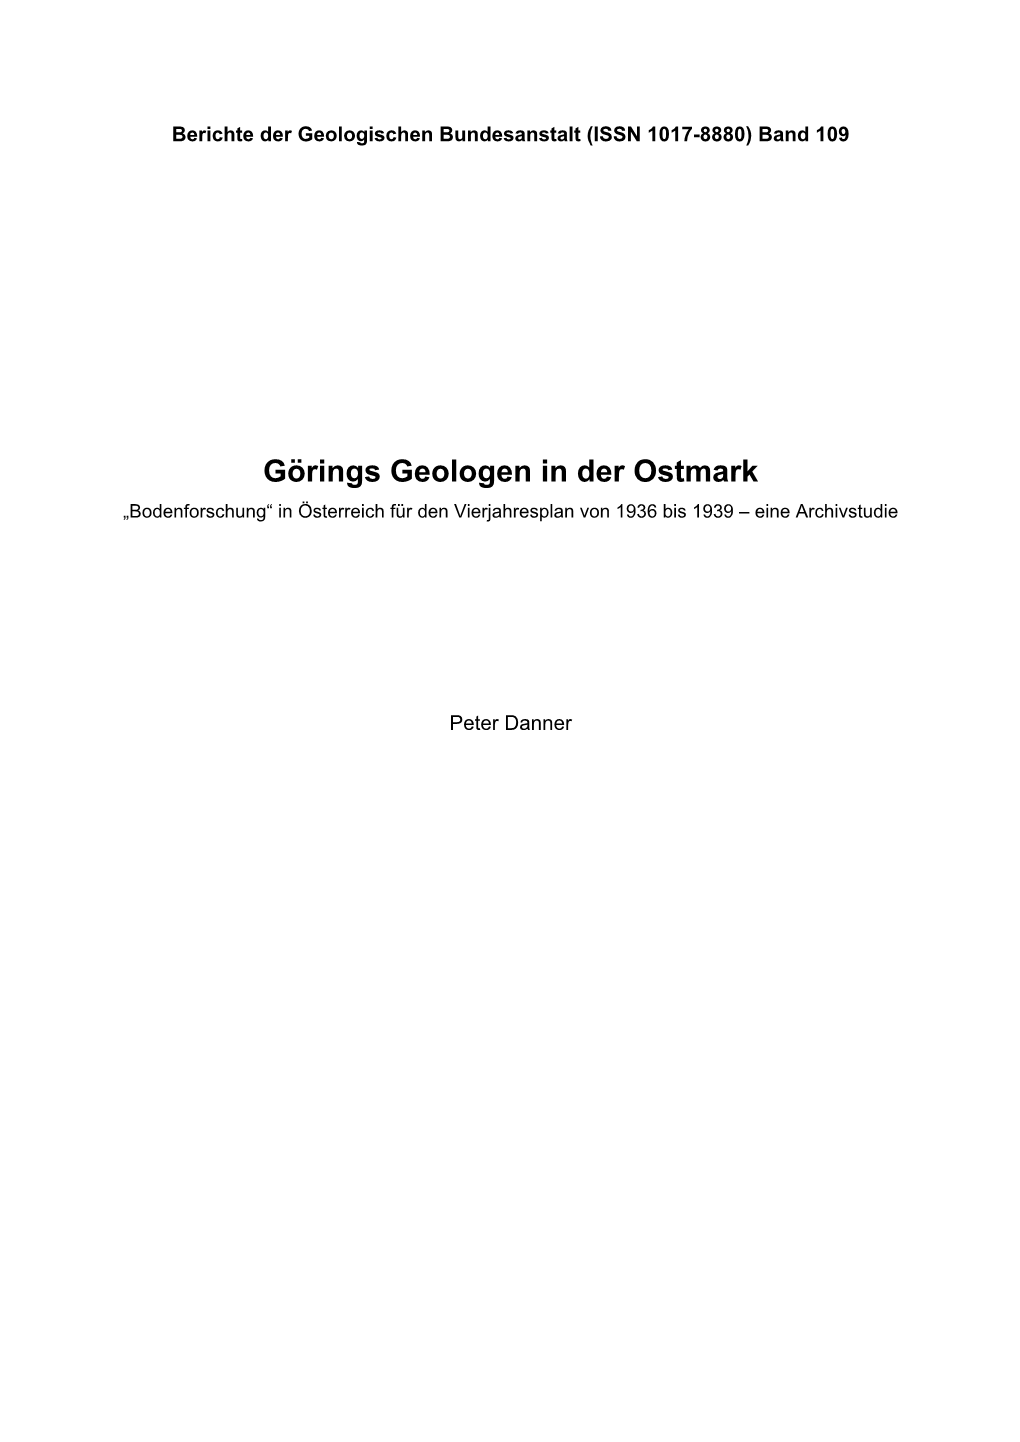 Görings Geologen in Der Ostmark